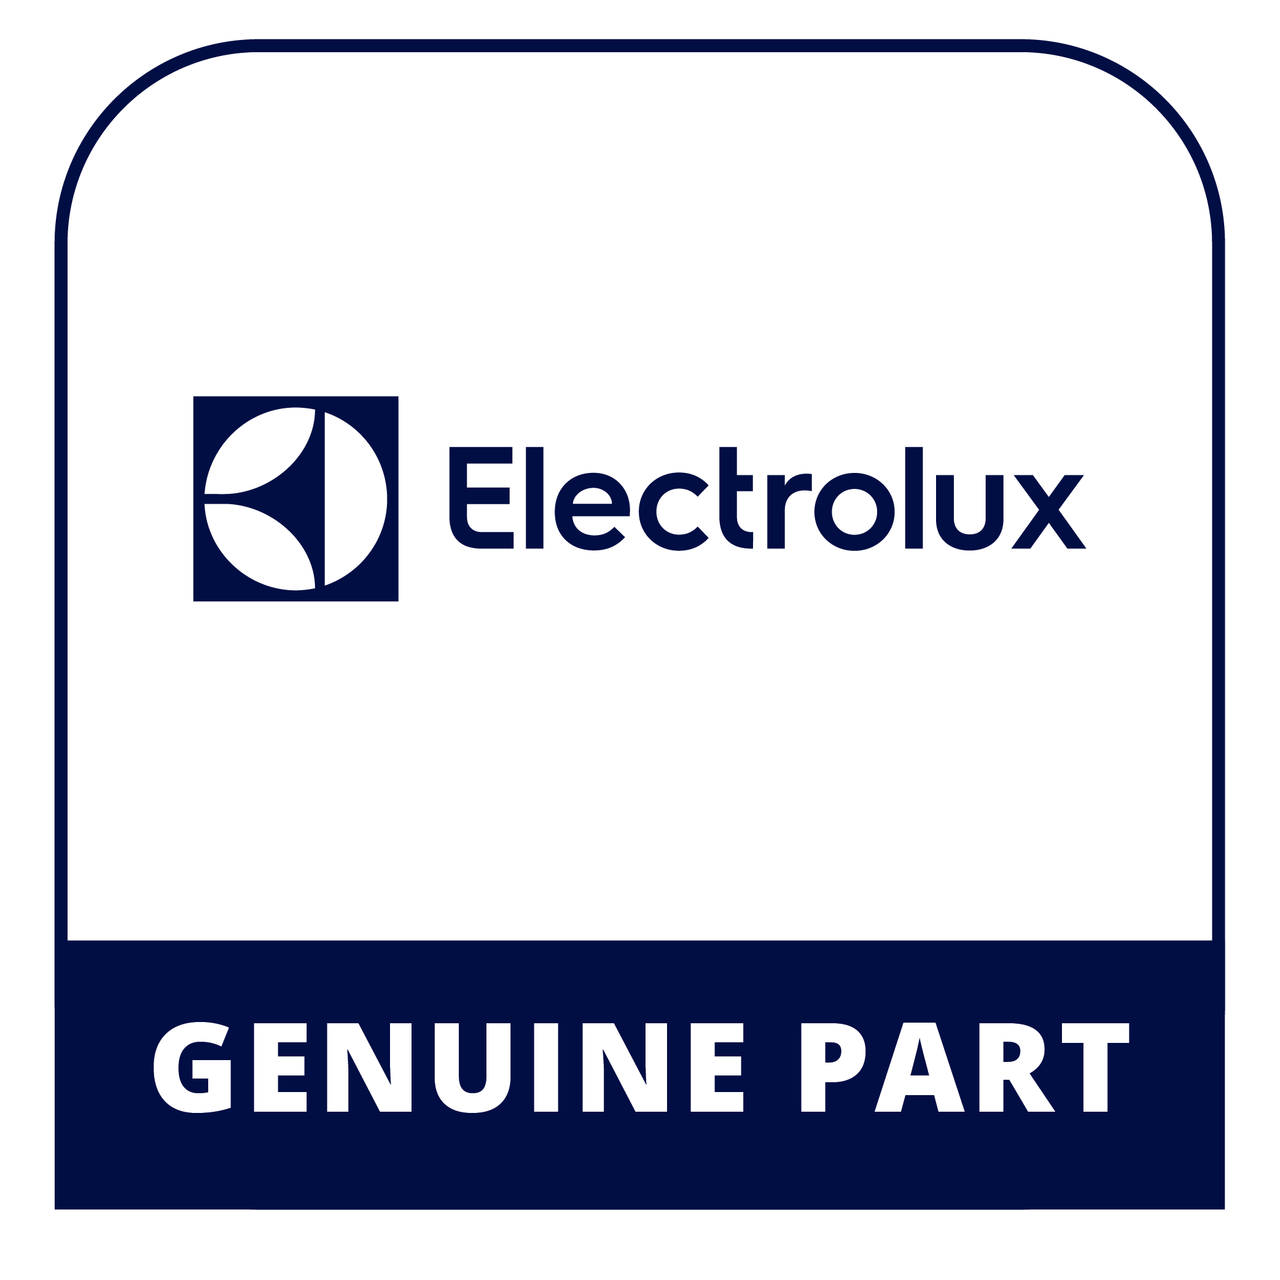 Frigidaire - Electrolux 316455714 Board - Genuine Electrolux Part